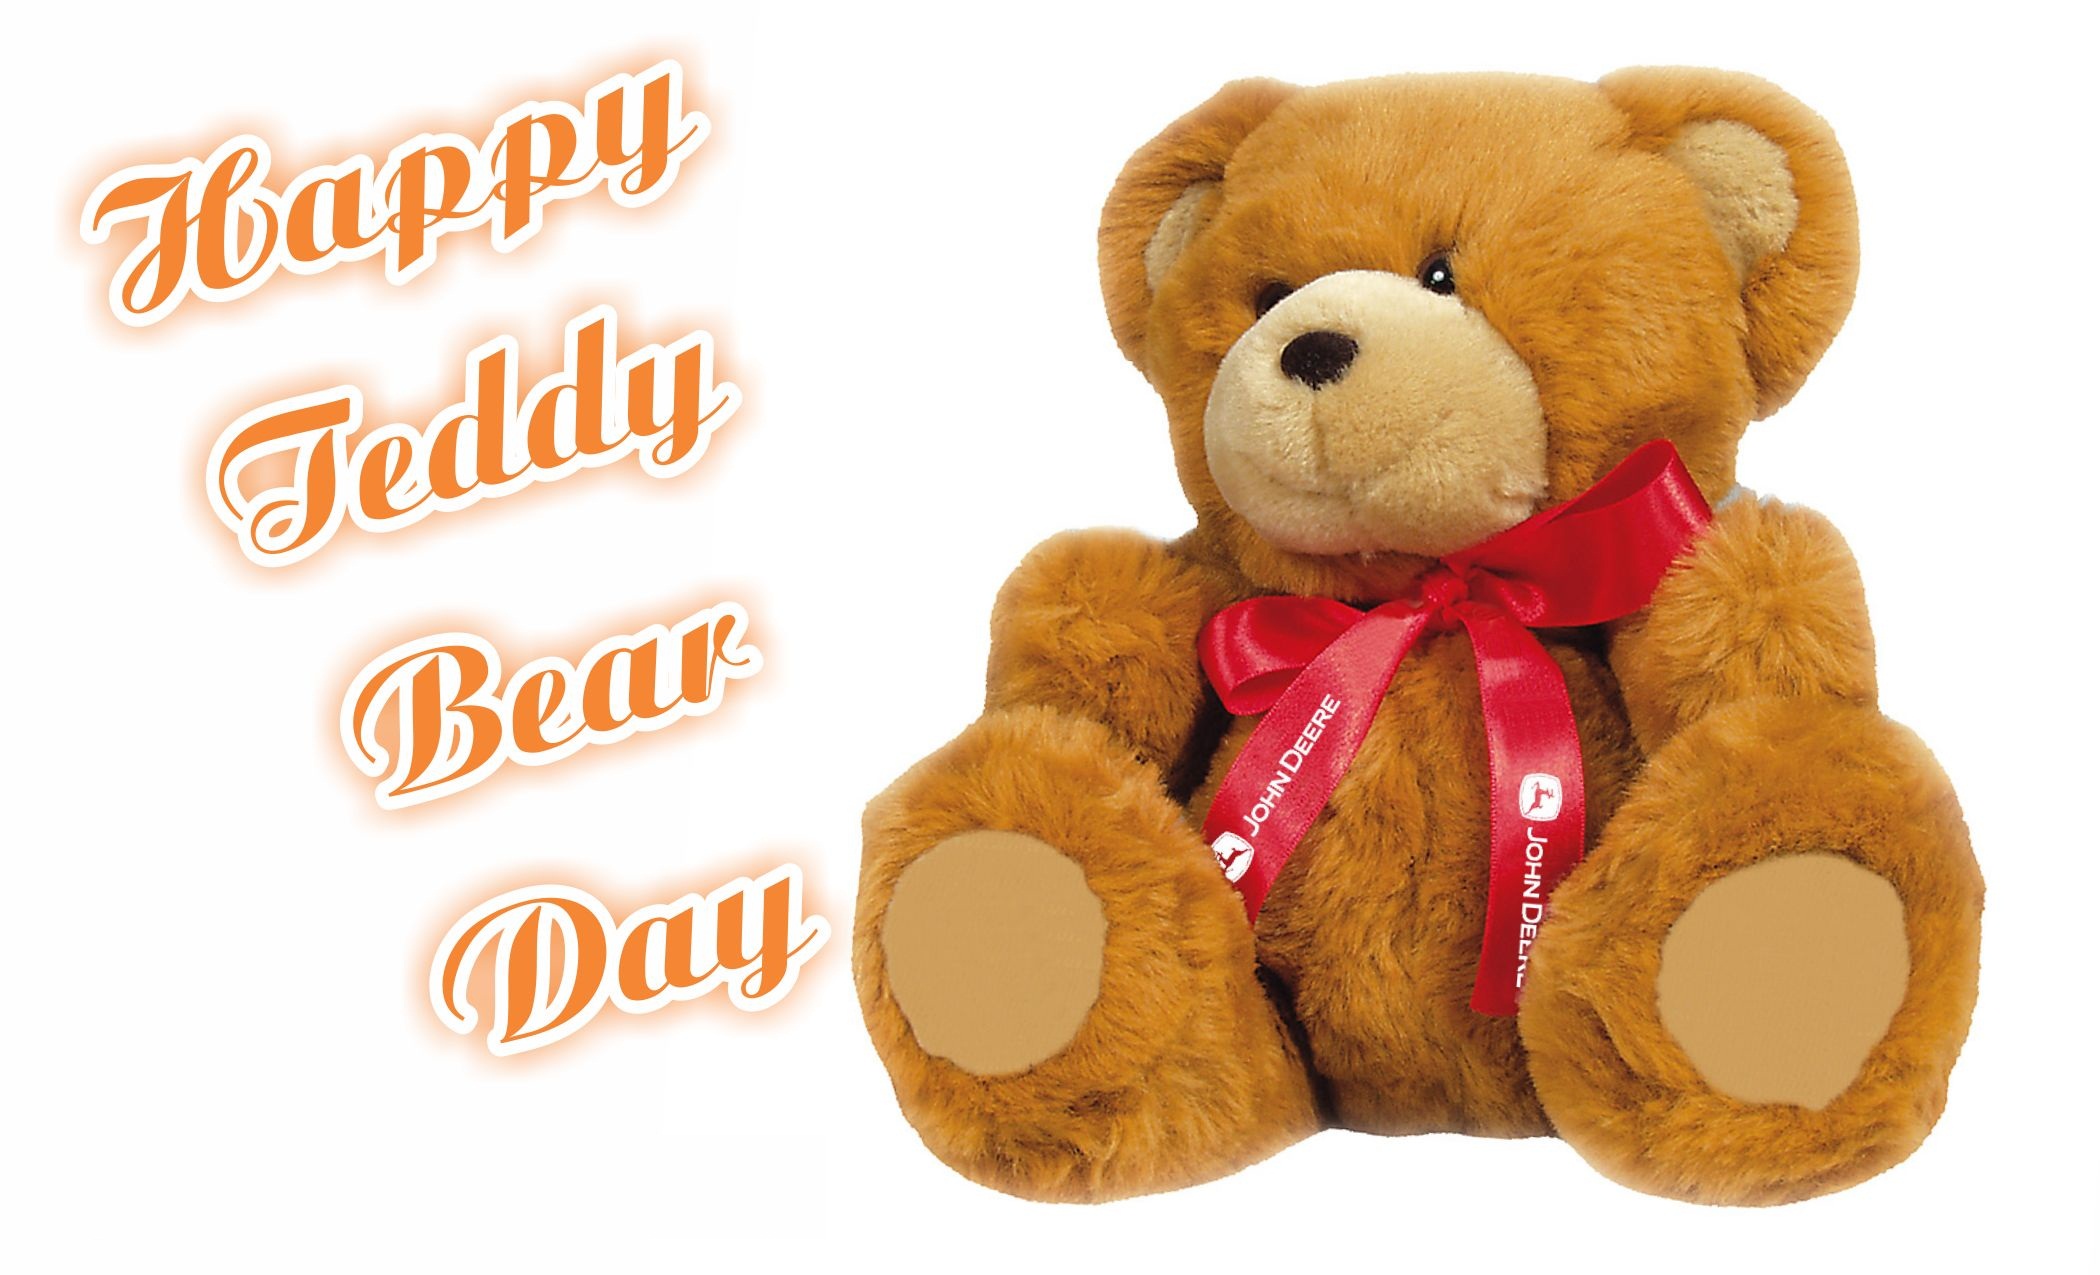 Beautiful Happy Teddy Day - HD Wallpaper 